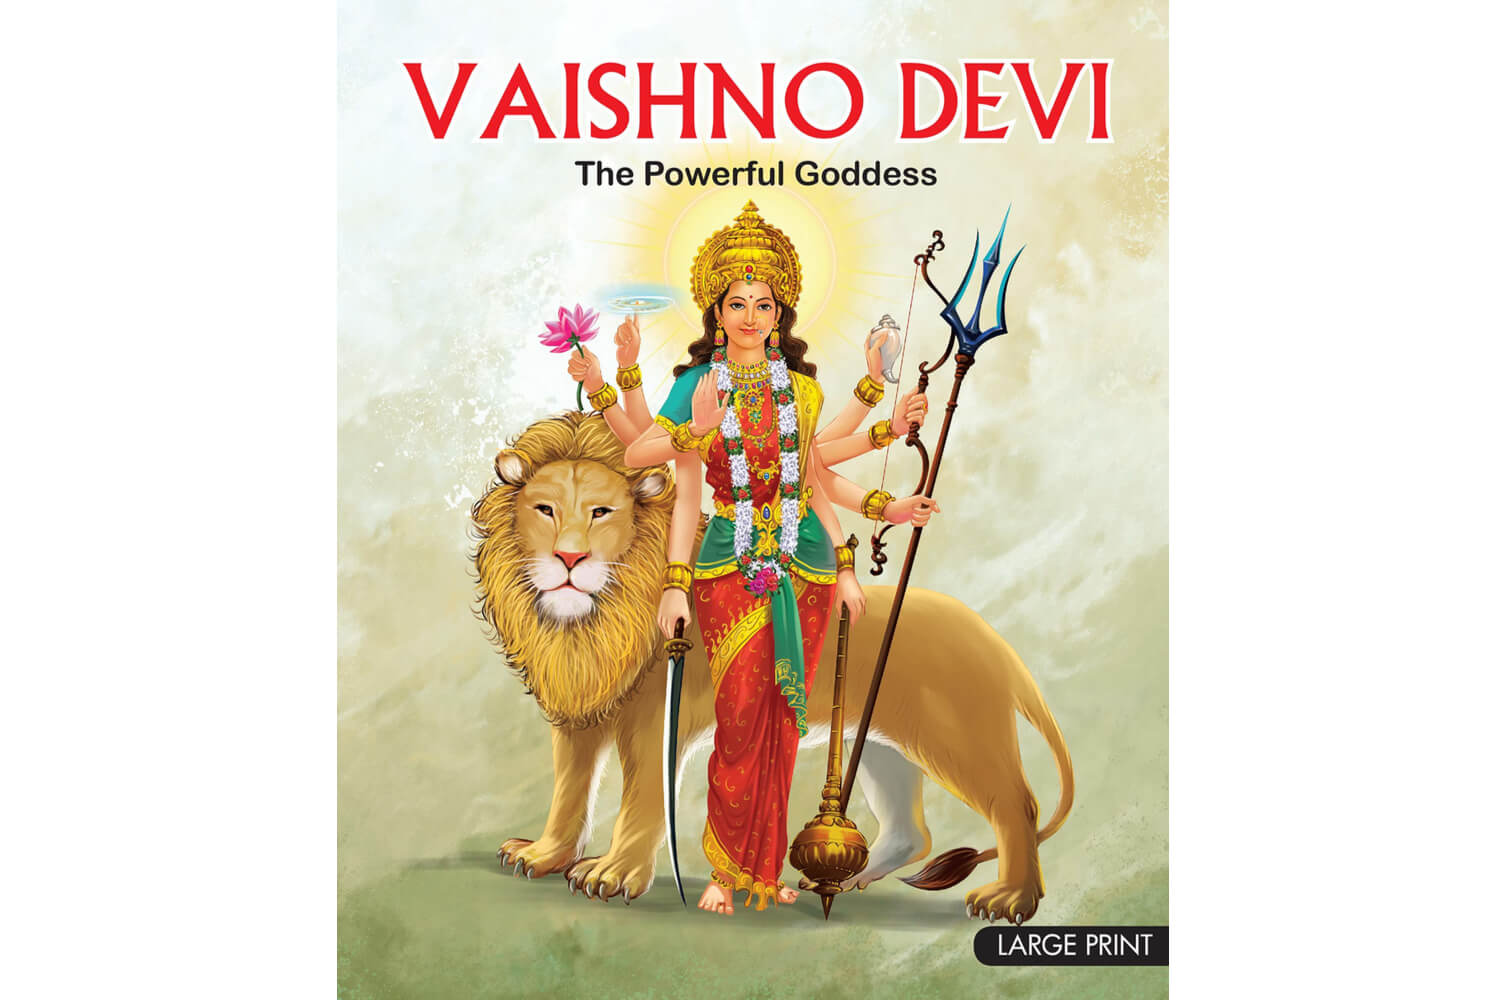 Vaishno devi -Indian Mythological Stories With Morals For Kids